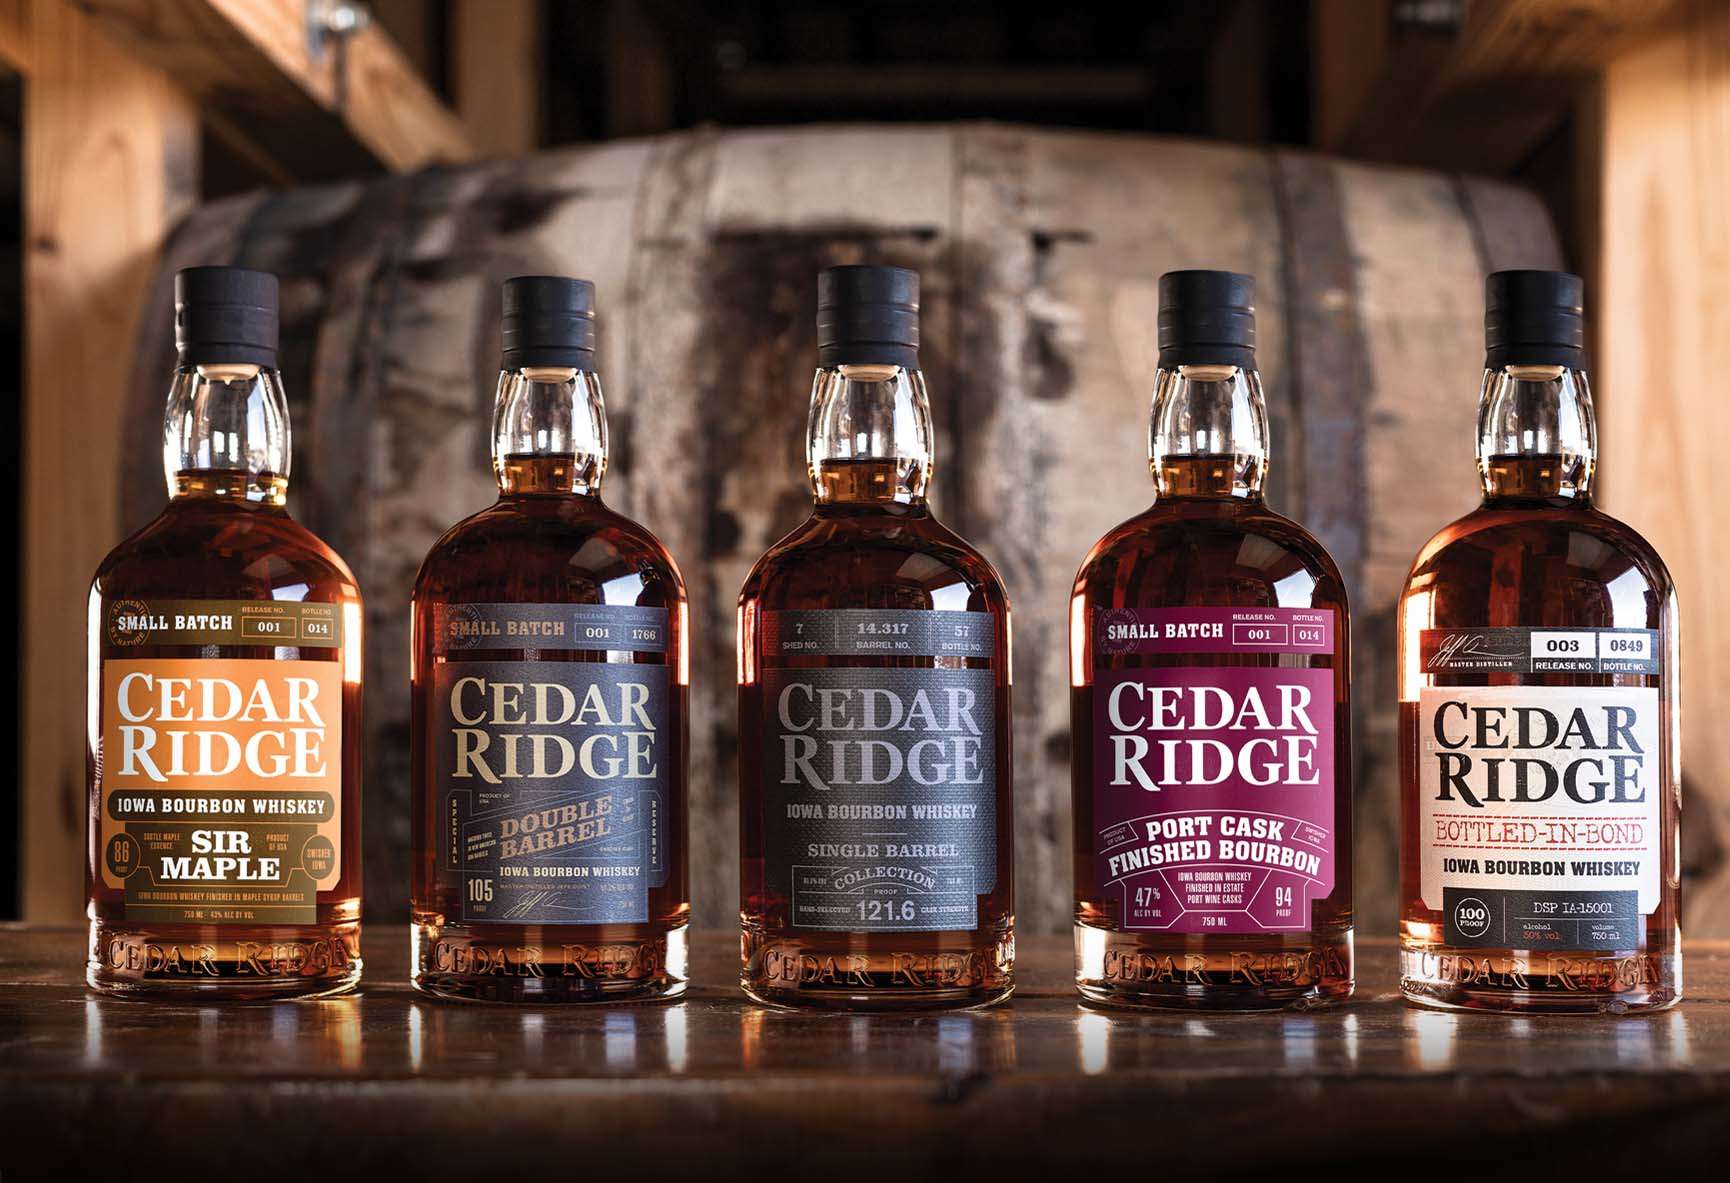 Cedar Ridge Whiskey bottles lined up in front of rick house barrel